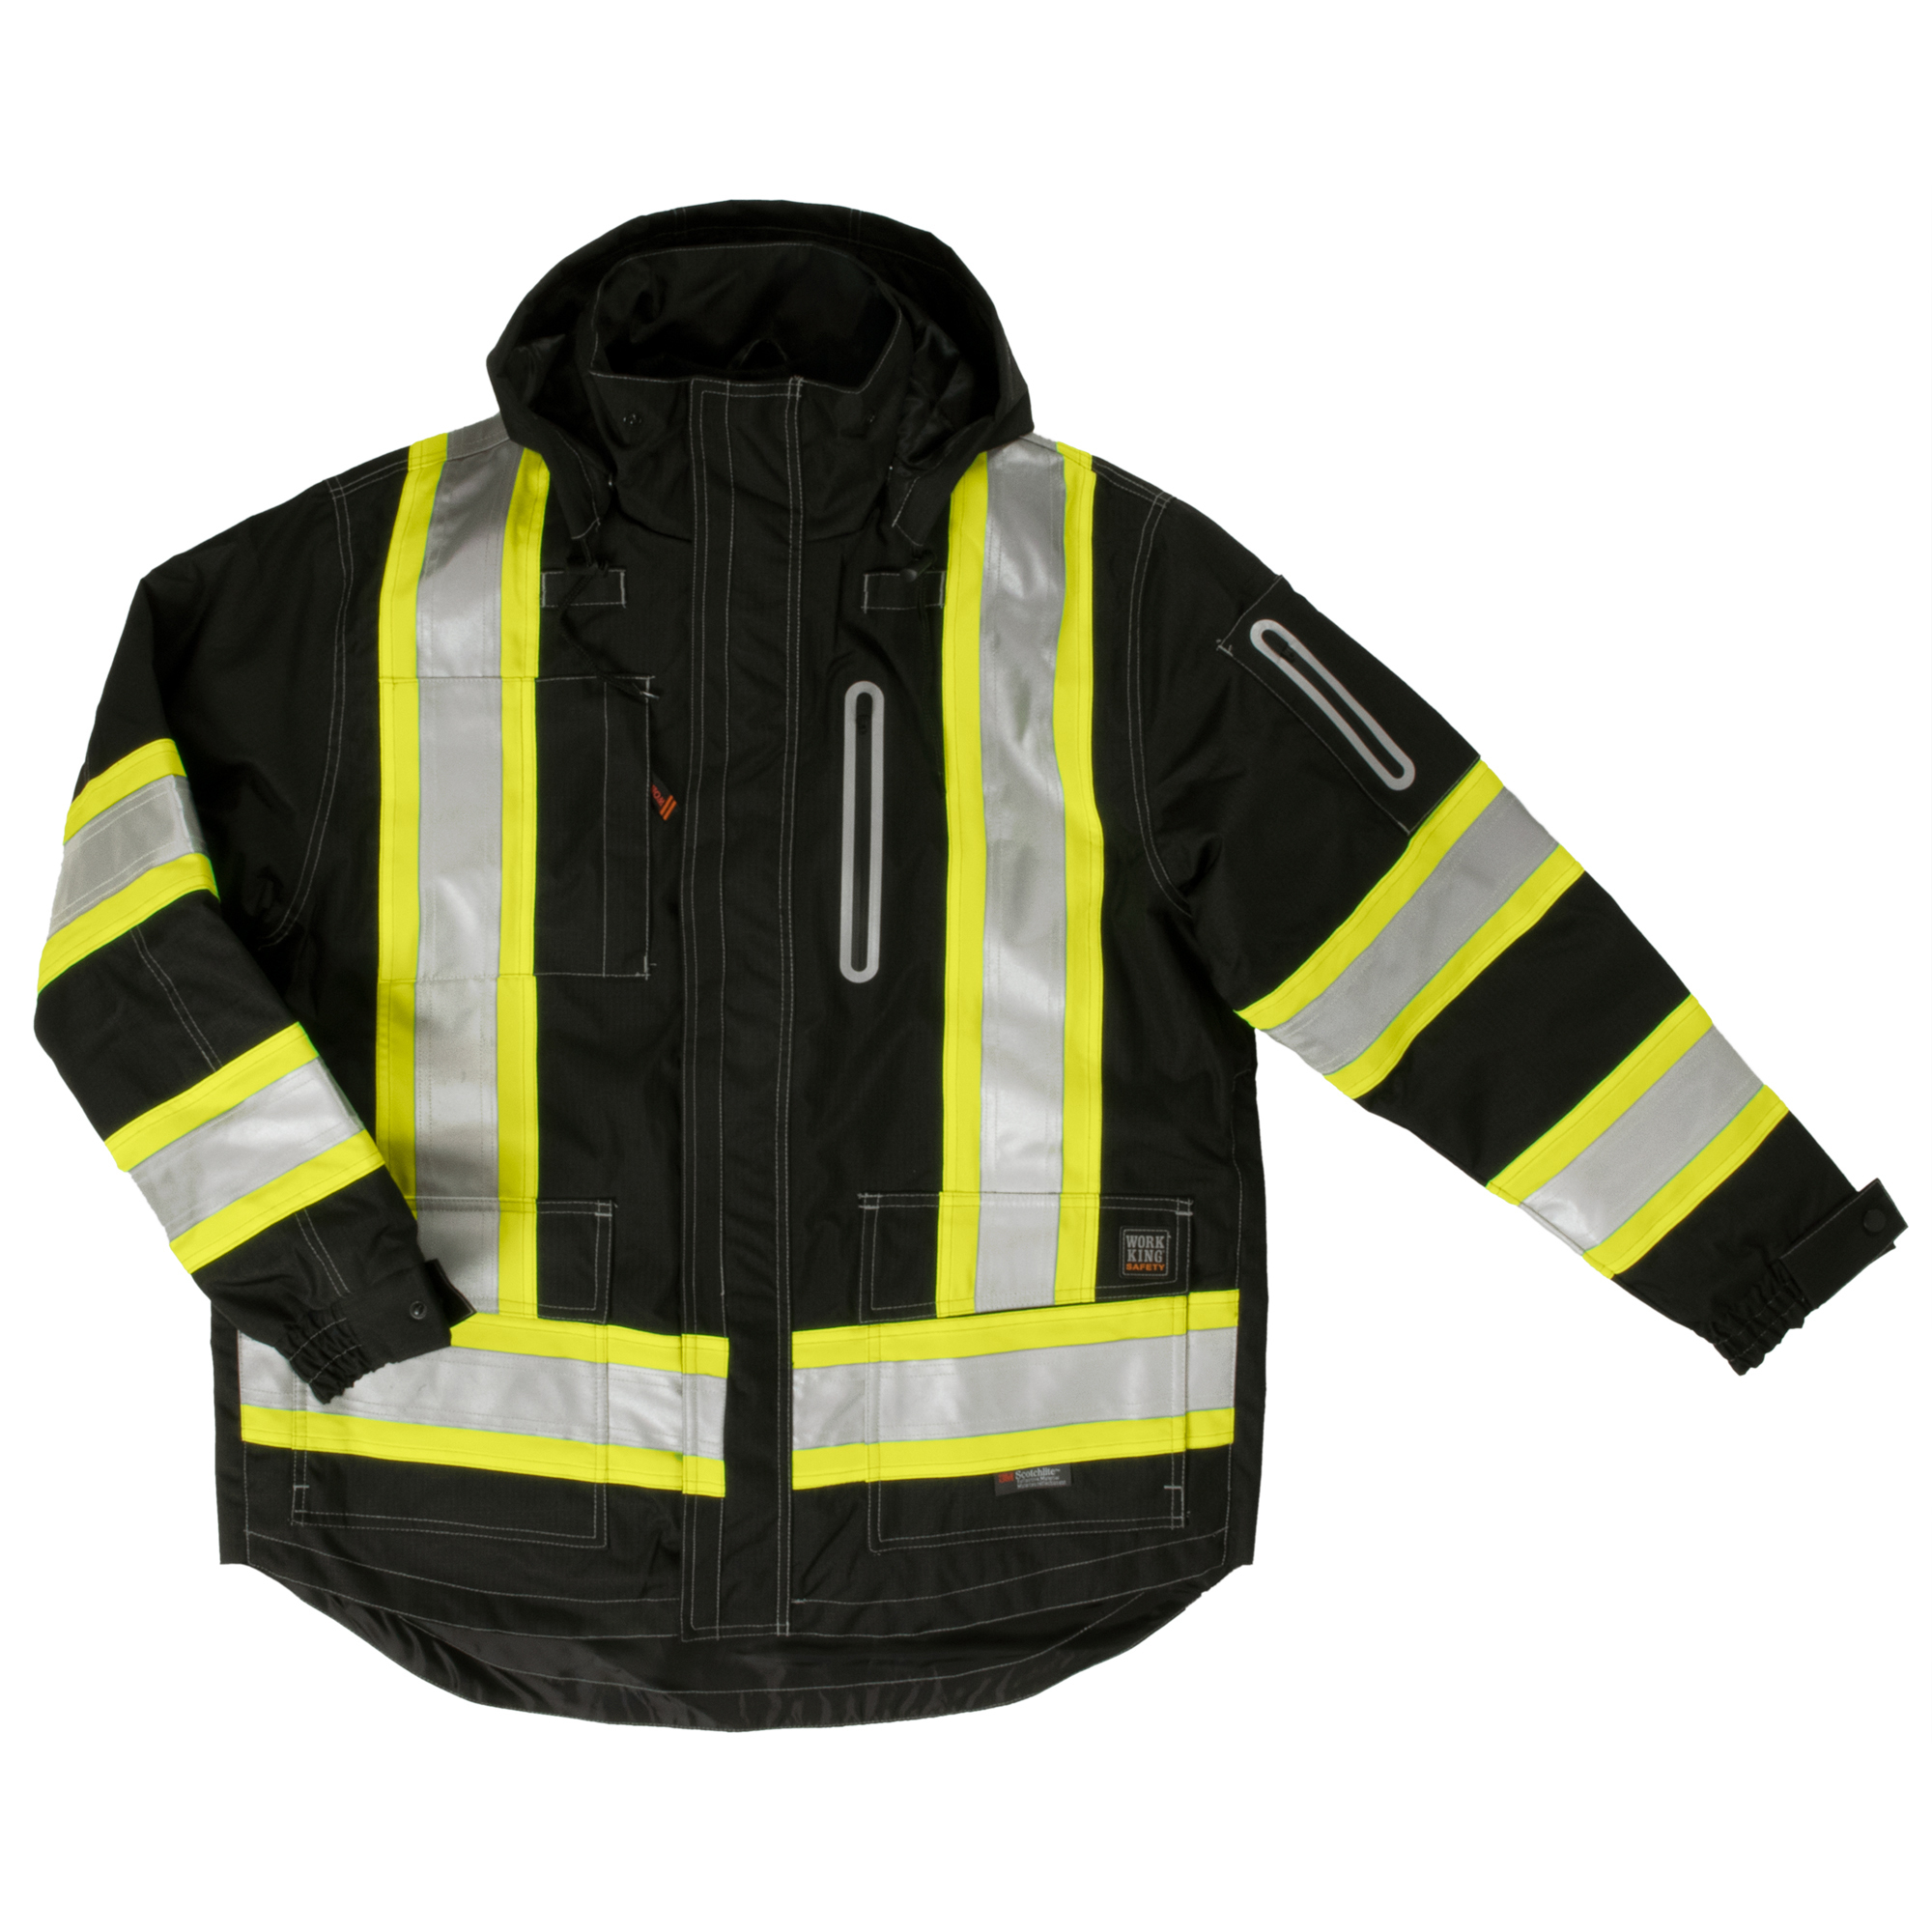 Tough Duck, 4Inch-1 Safety Jacket, Size 2XL, Color BLACK, Model S18721-BLK-2XL